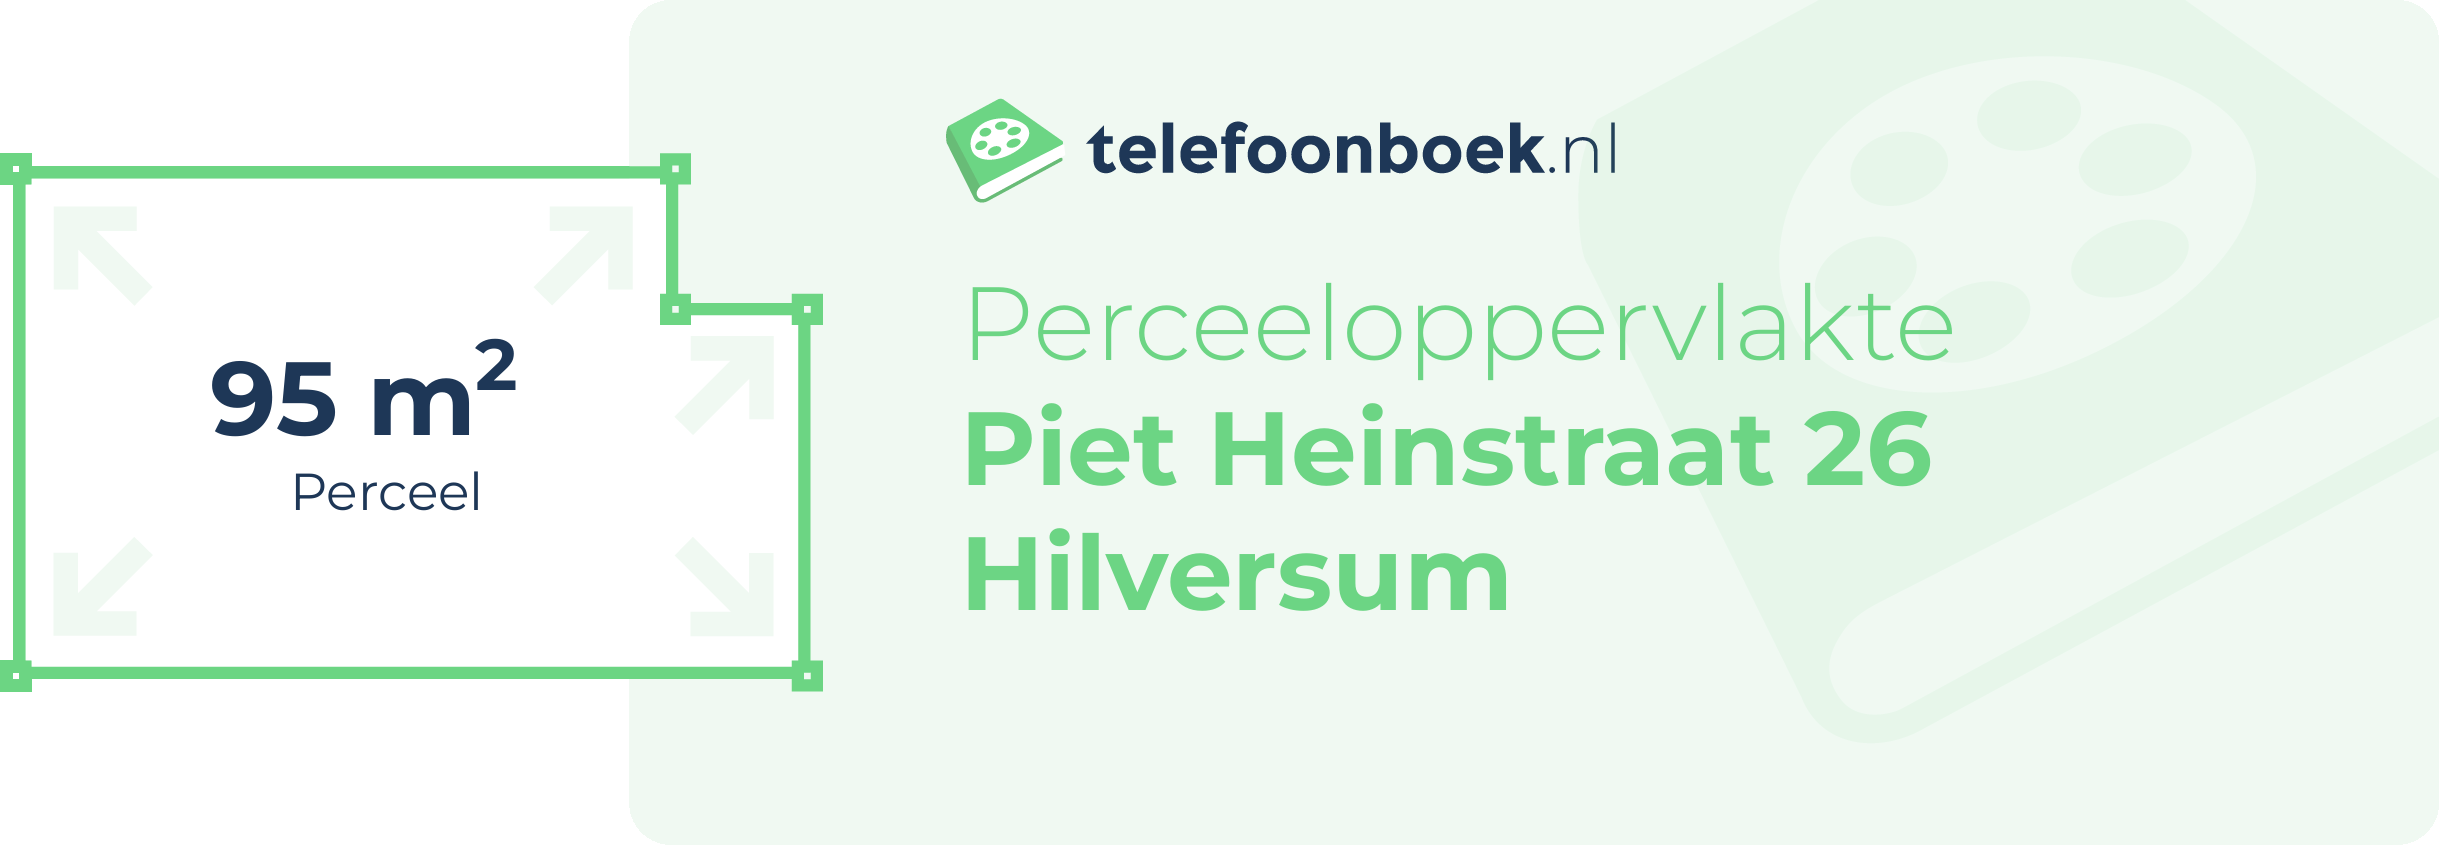 Perceeloppervlakte Piet Heinstraat 26 Hilversum